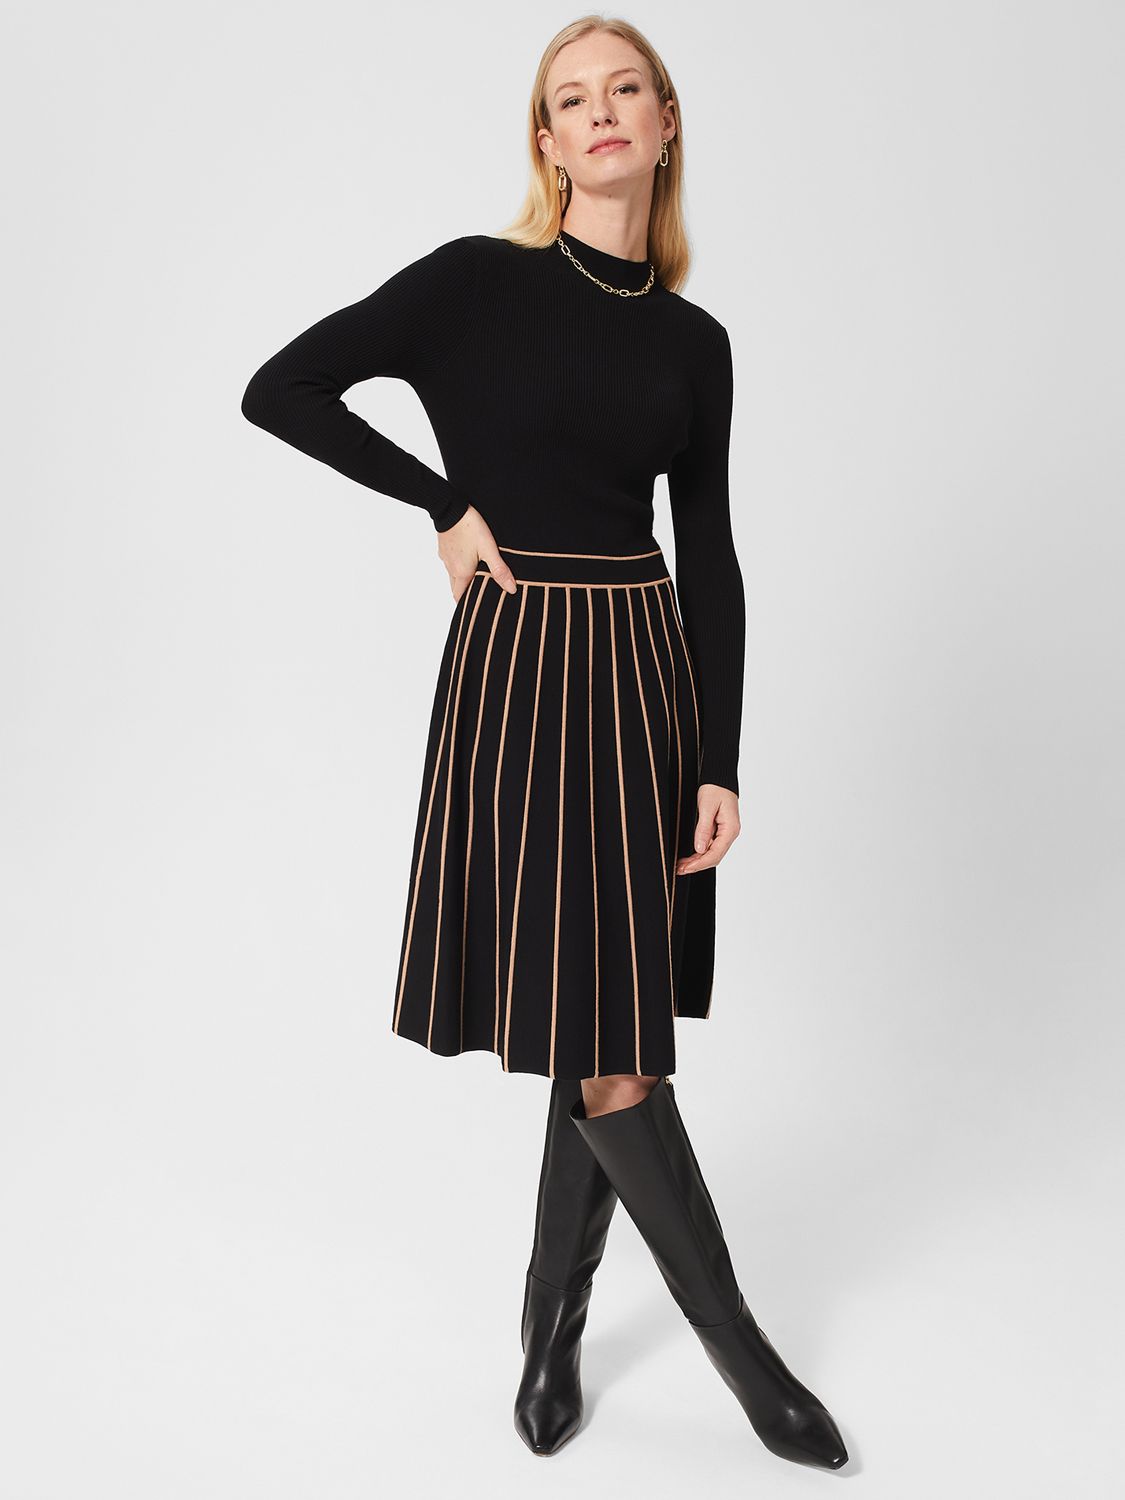 Hobbs Petite Lena Knee Length Dress, Black Stone/Multi, 18